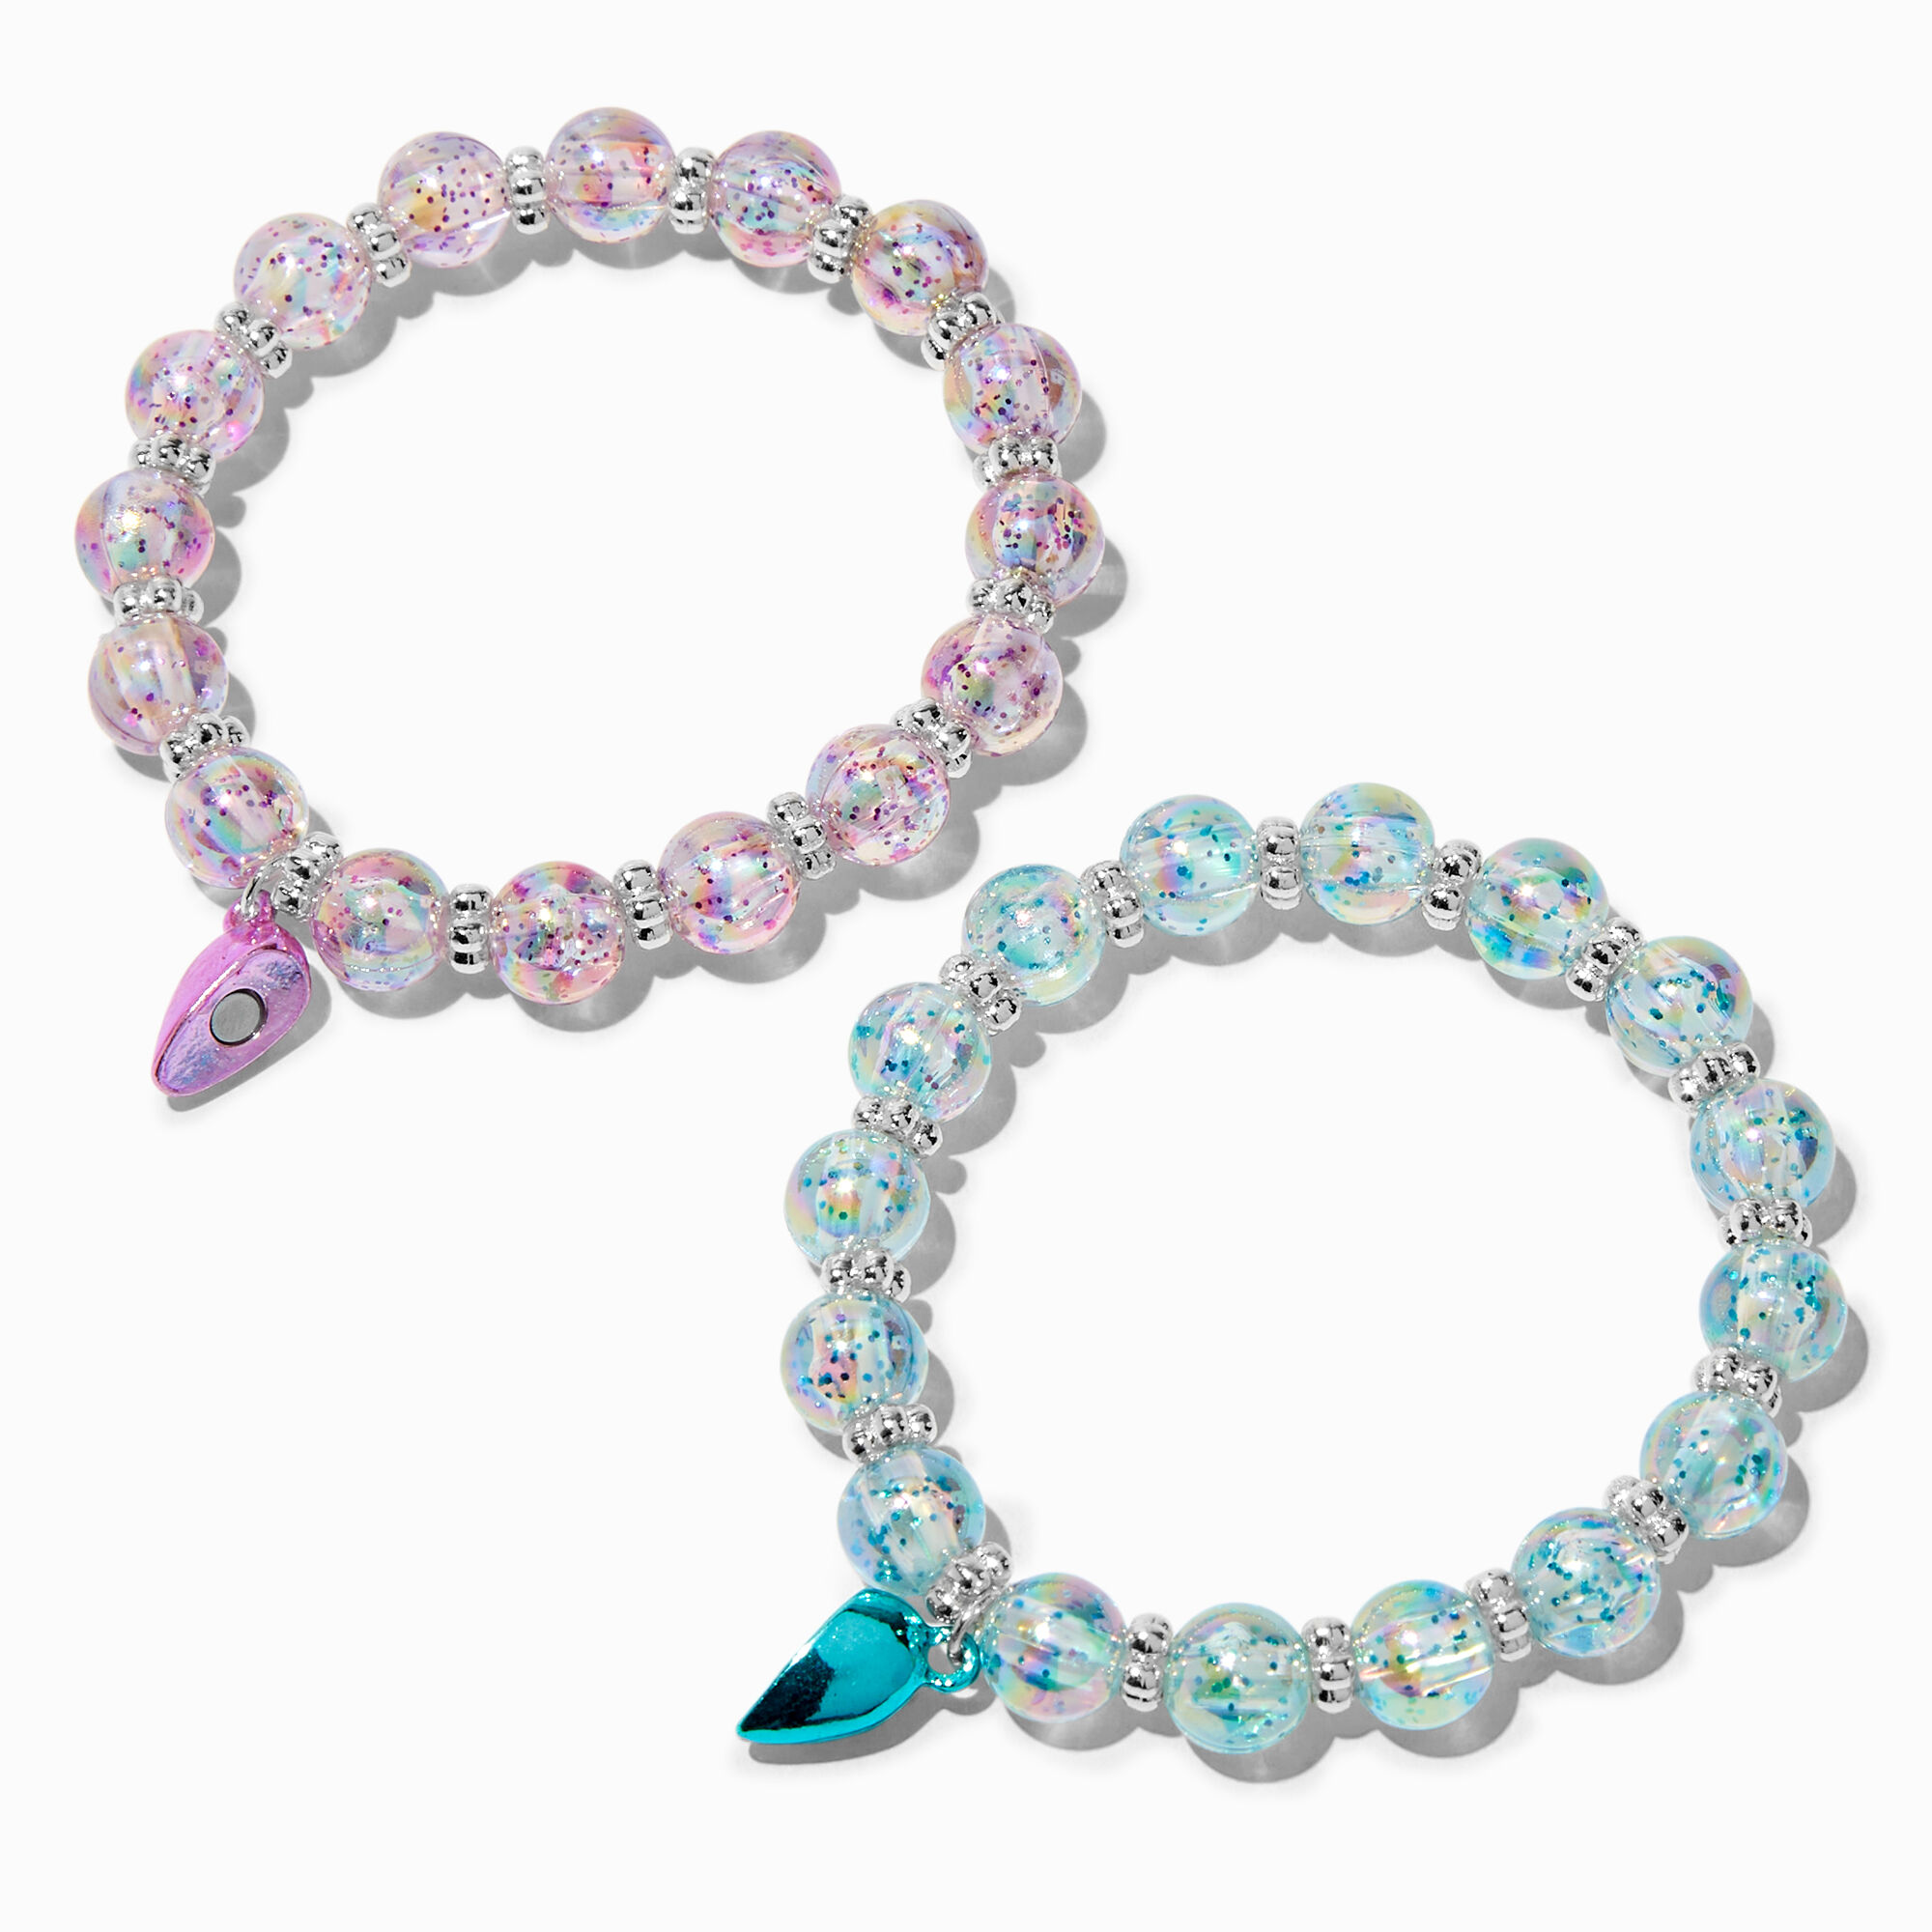 View Claires Best Friends Split Heart Glitter Beaded Bracelets 2 Pack Blue information